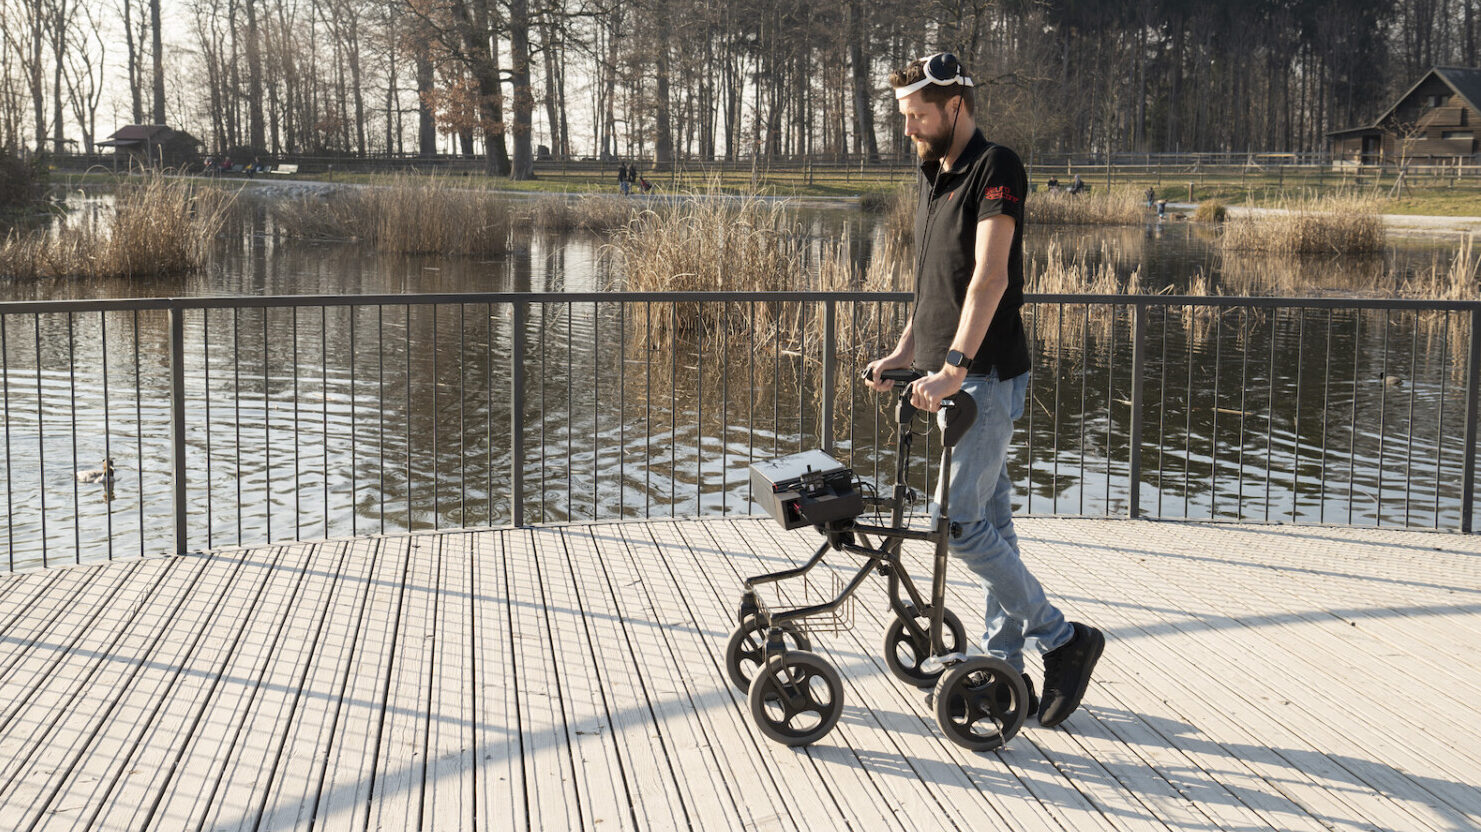 Gert-Jan Oskam walks during new paralysis study